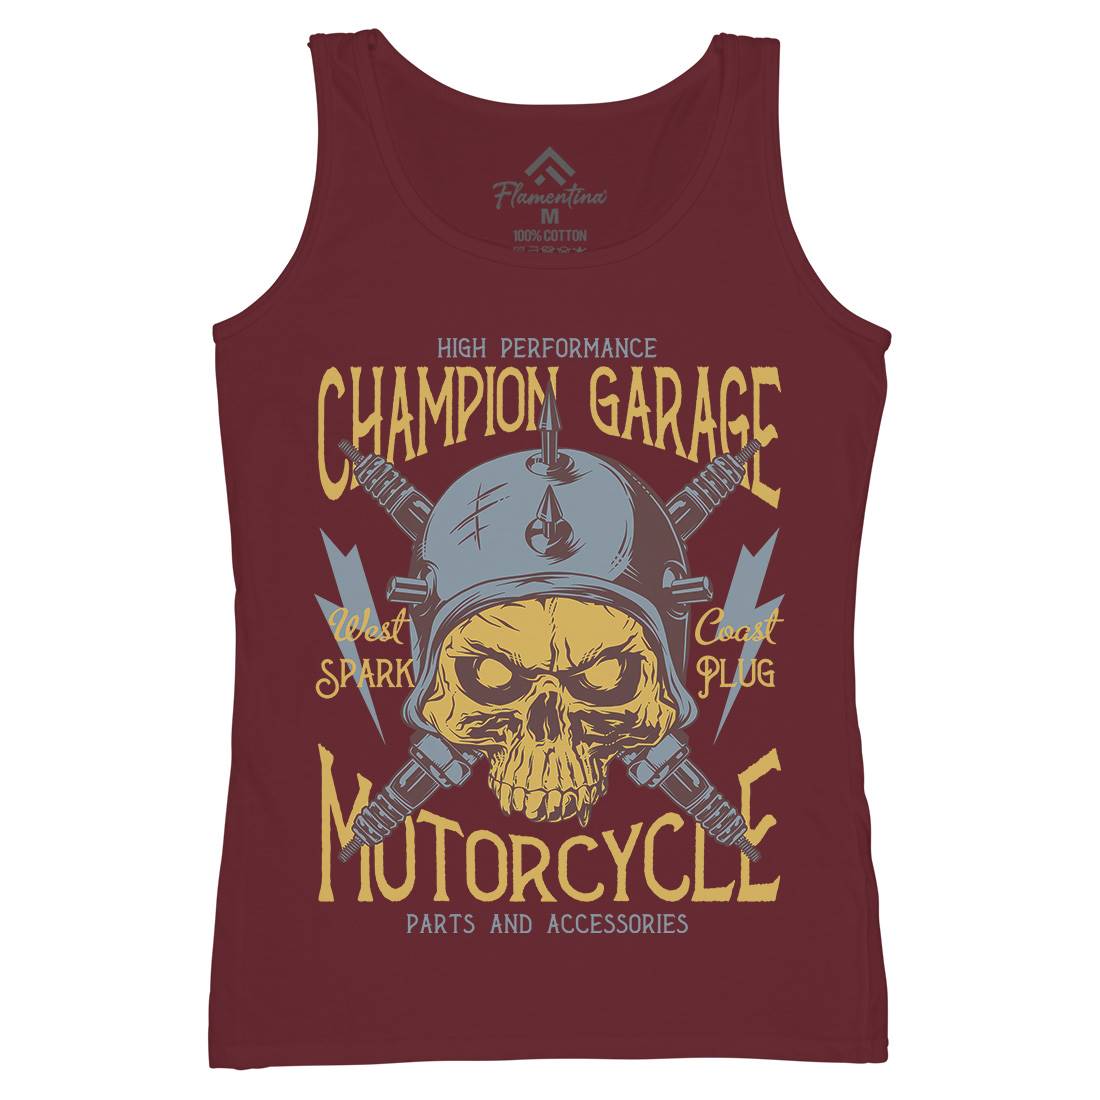 Champion Garage Womens Organic Tank Top Vest Motorcycles D917